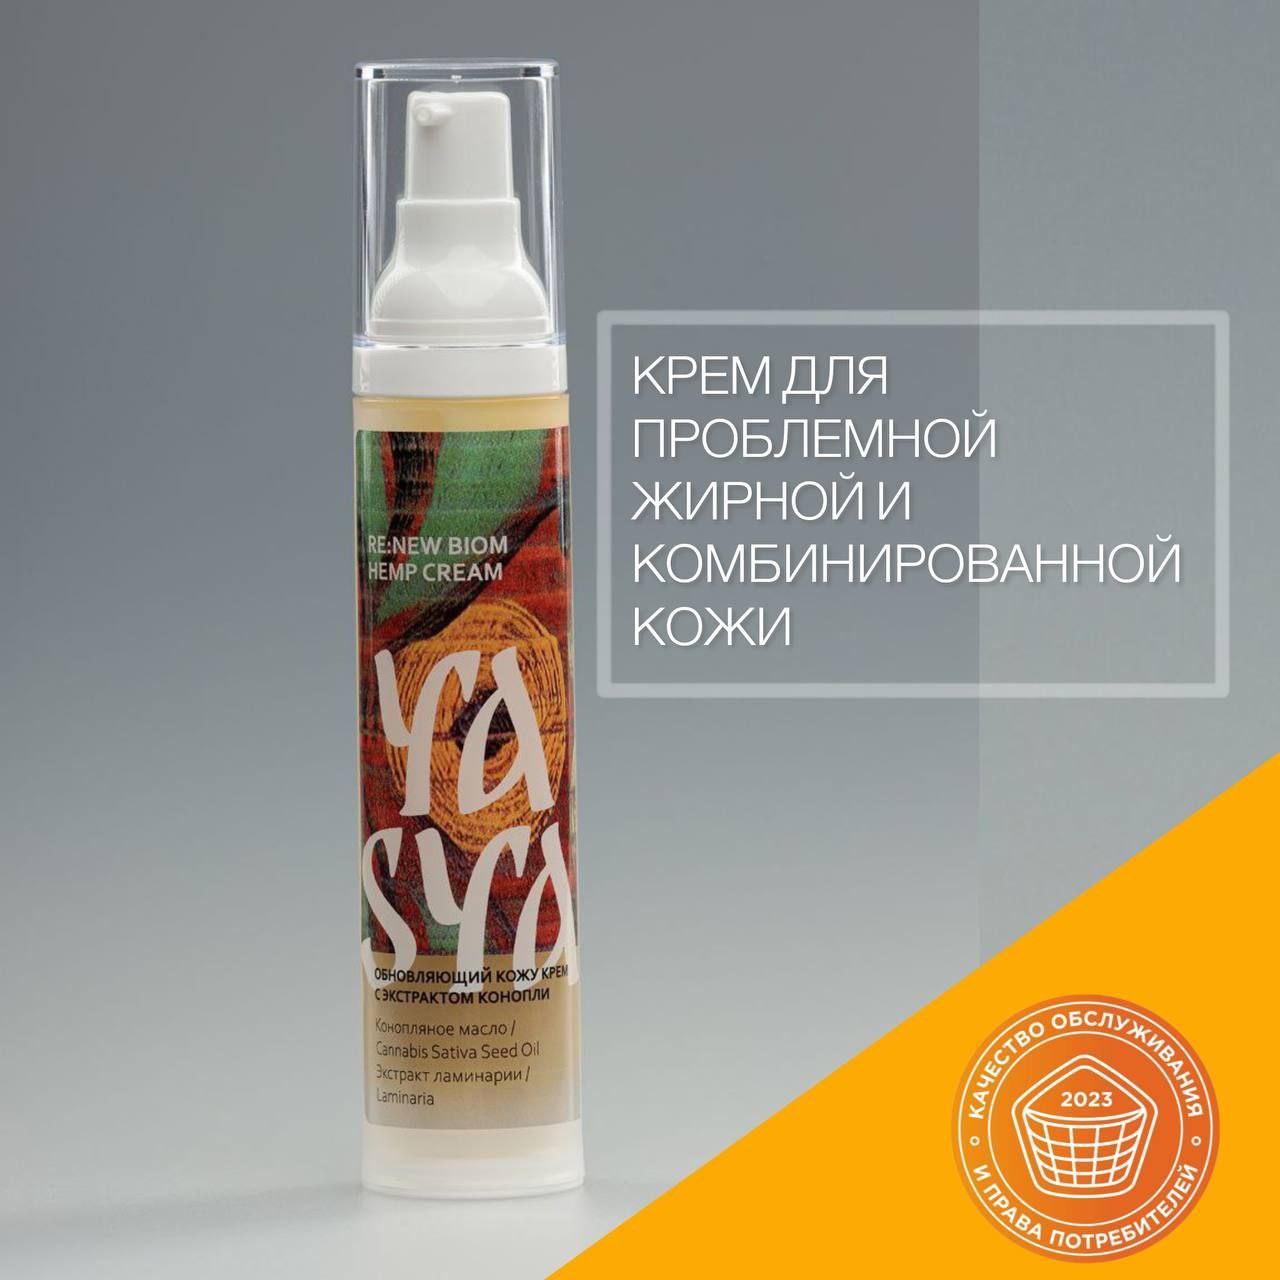 Крем Yasya Biom Hemp Cream для проблемной кожи 50 мл edwin jagger крем для бритья aloe vera 75